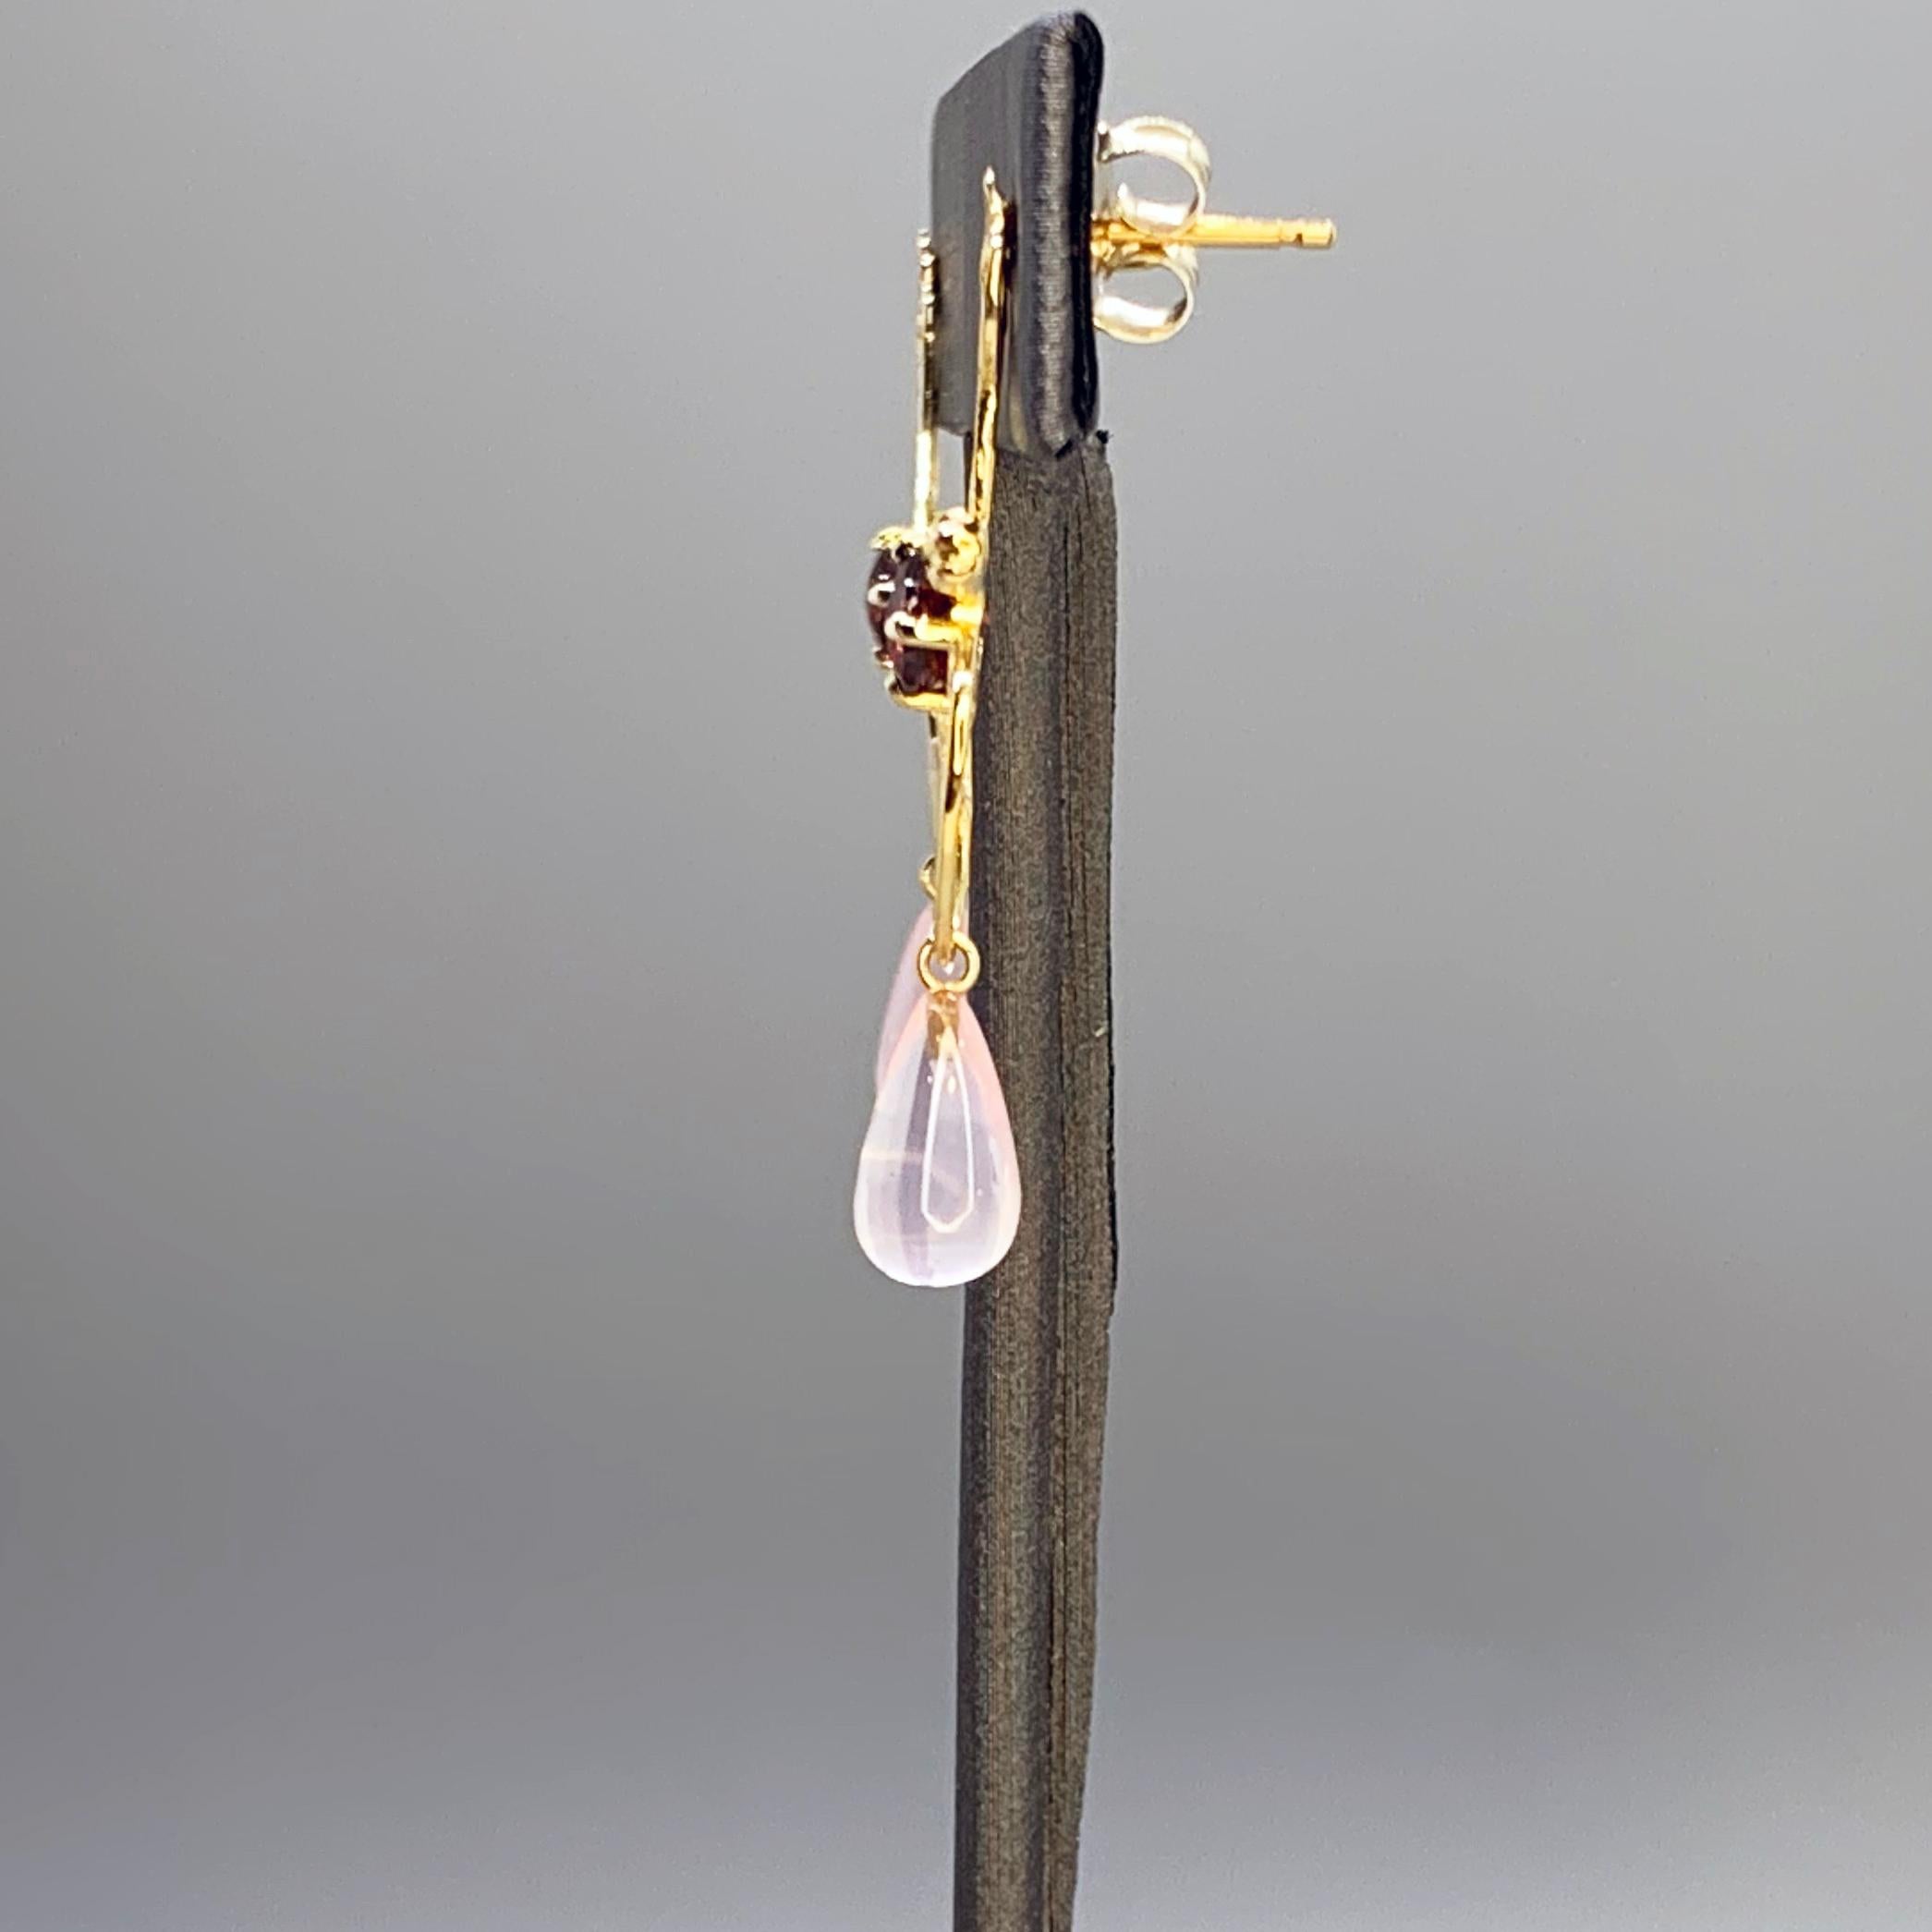 Briolette Cut Upcycled Vintage Earrings With Garnet, Rose Quartz, 10k & 14k Gold by G&G Studio For Sale